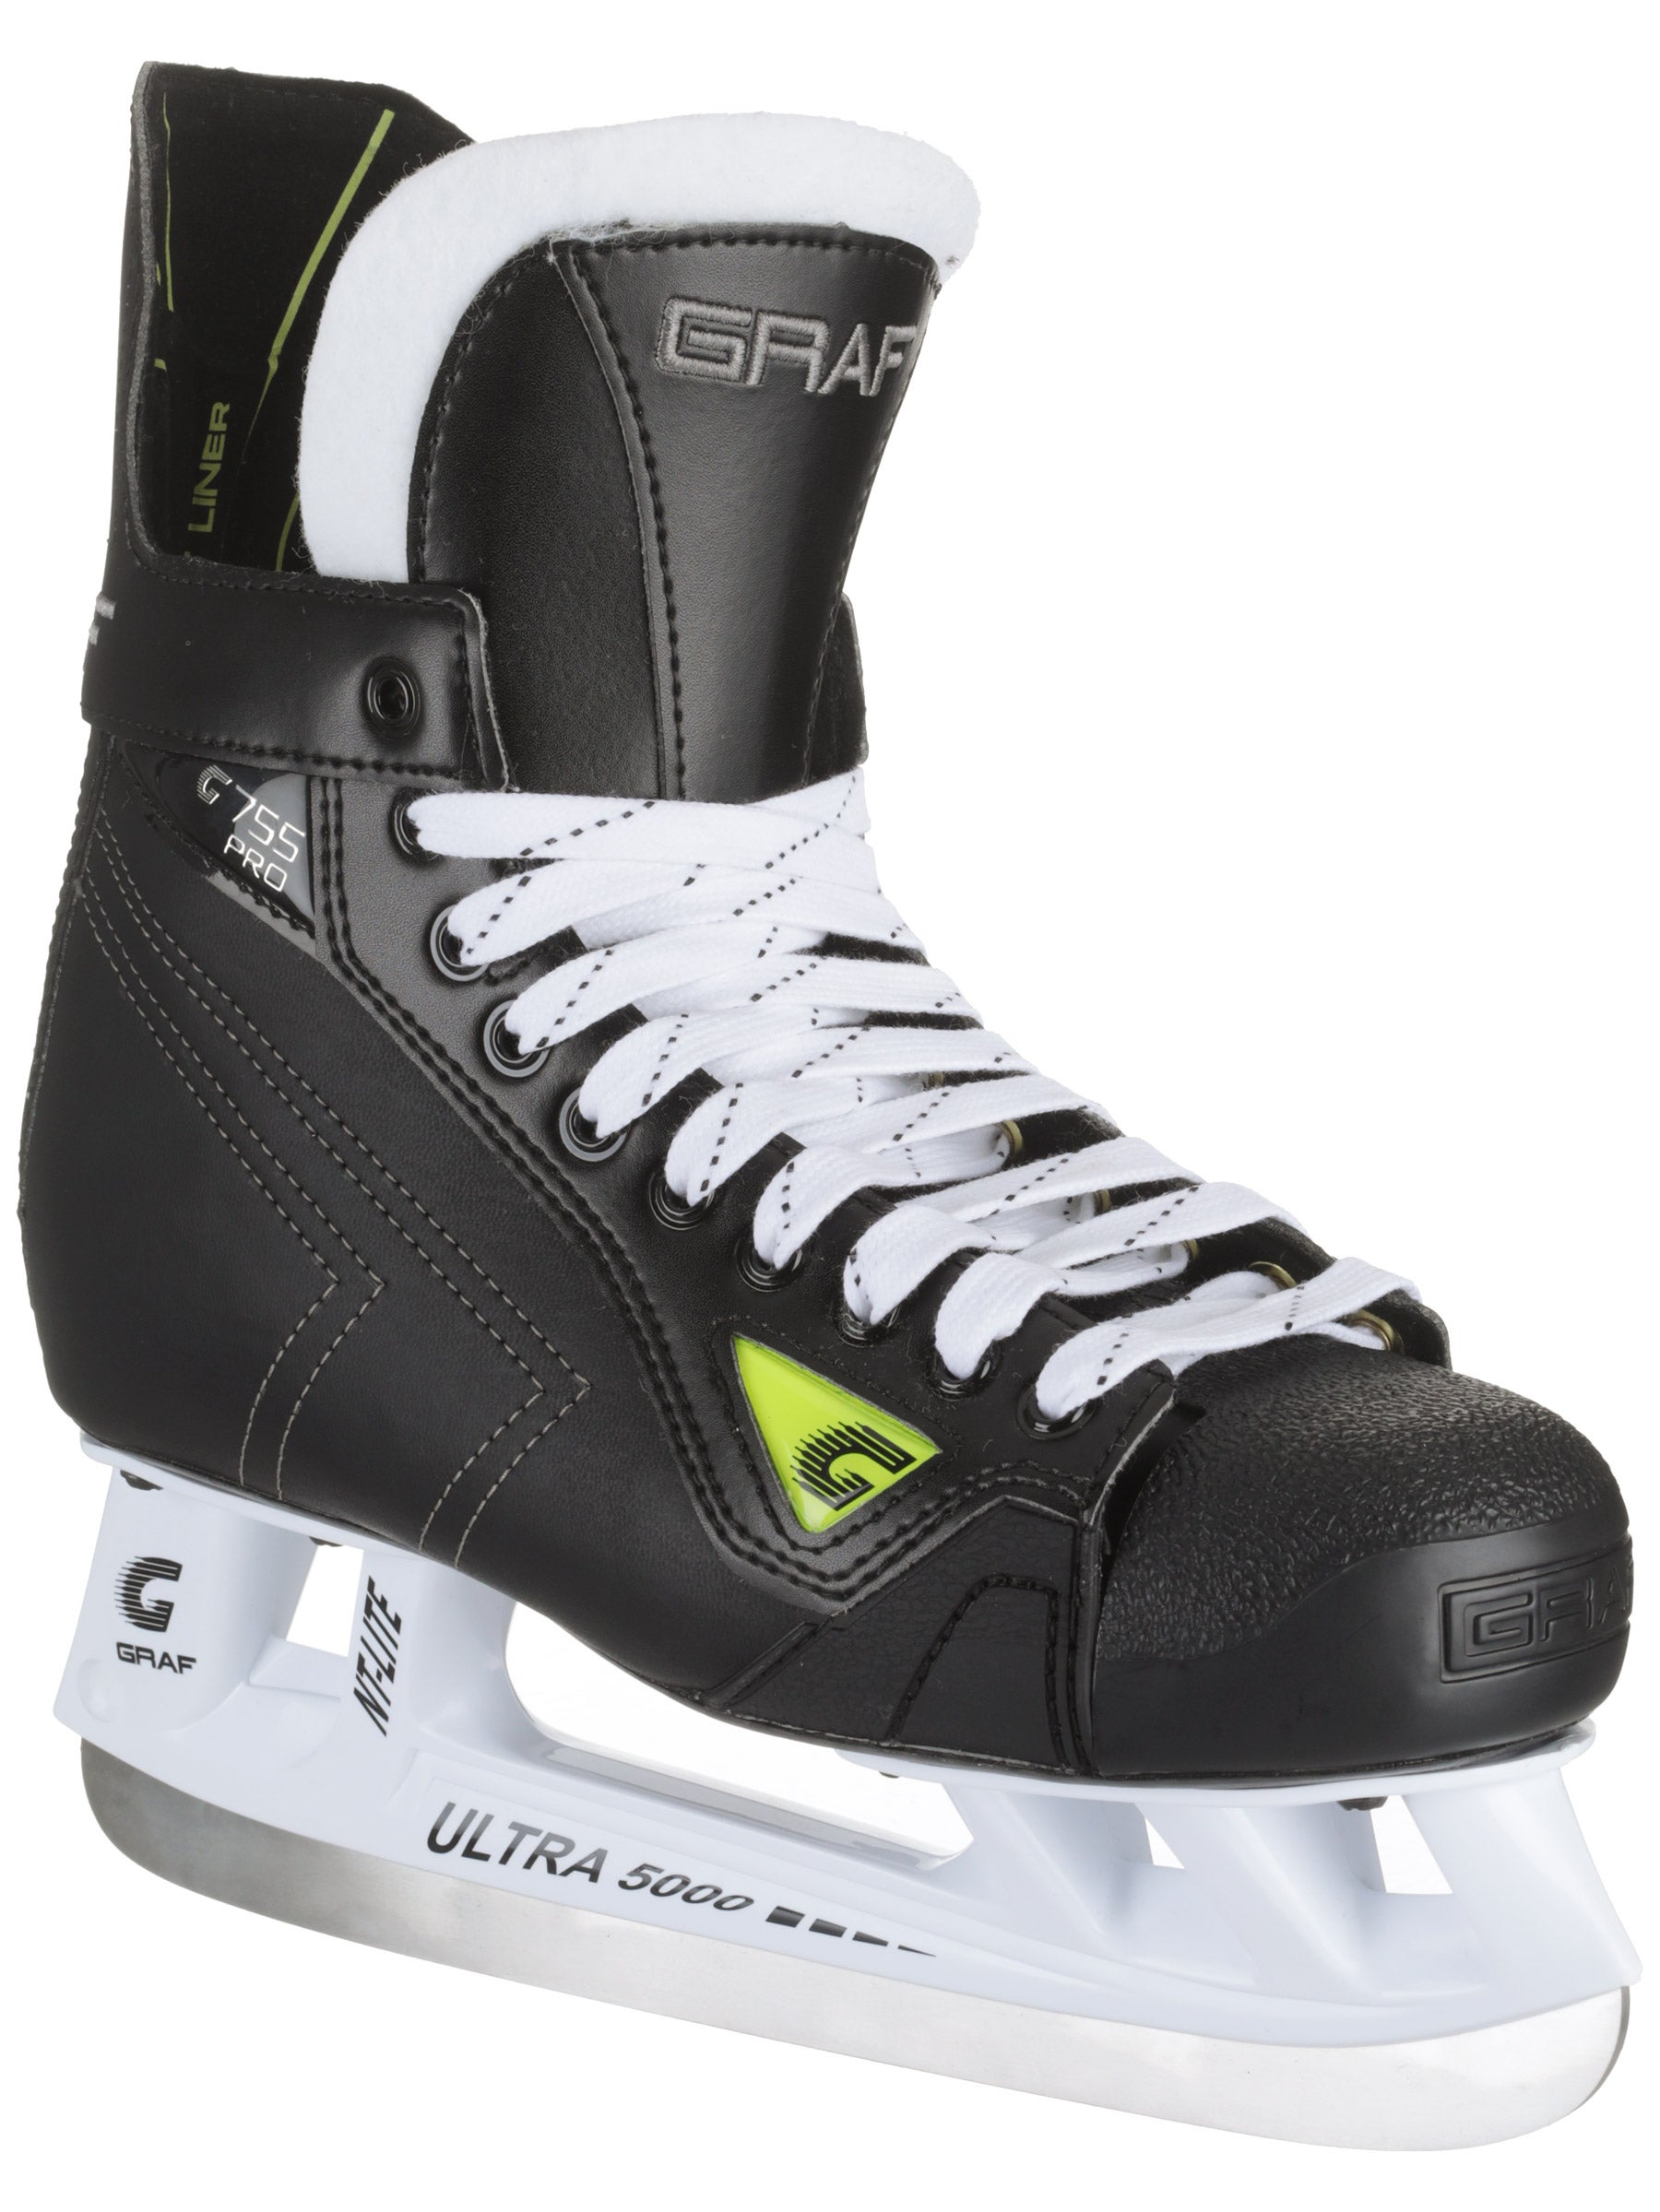 NEW Graf G755 Pro Adult Hockey Player Skate Regular Boot Size 9 